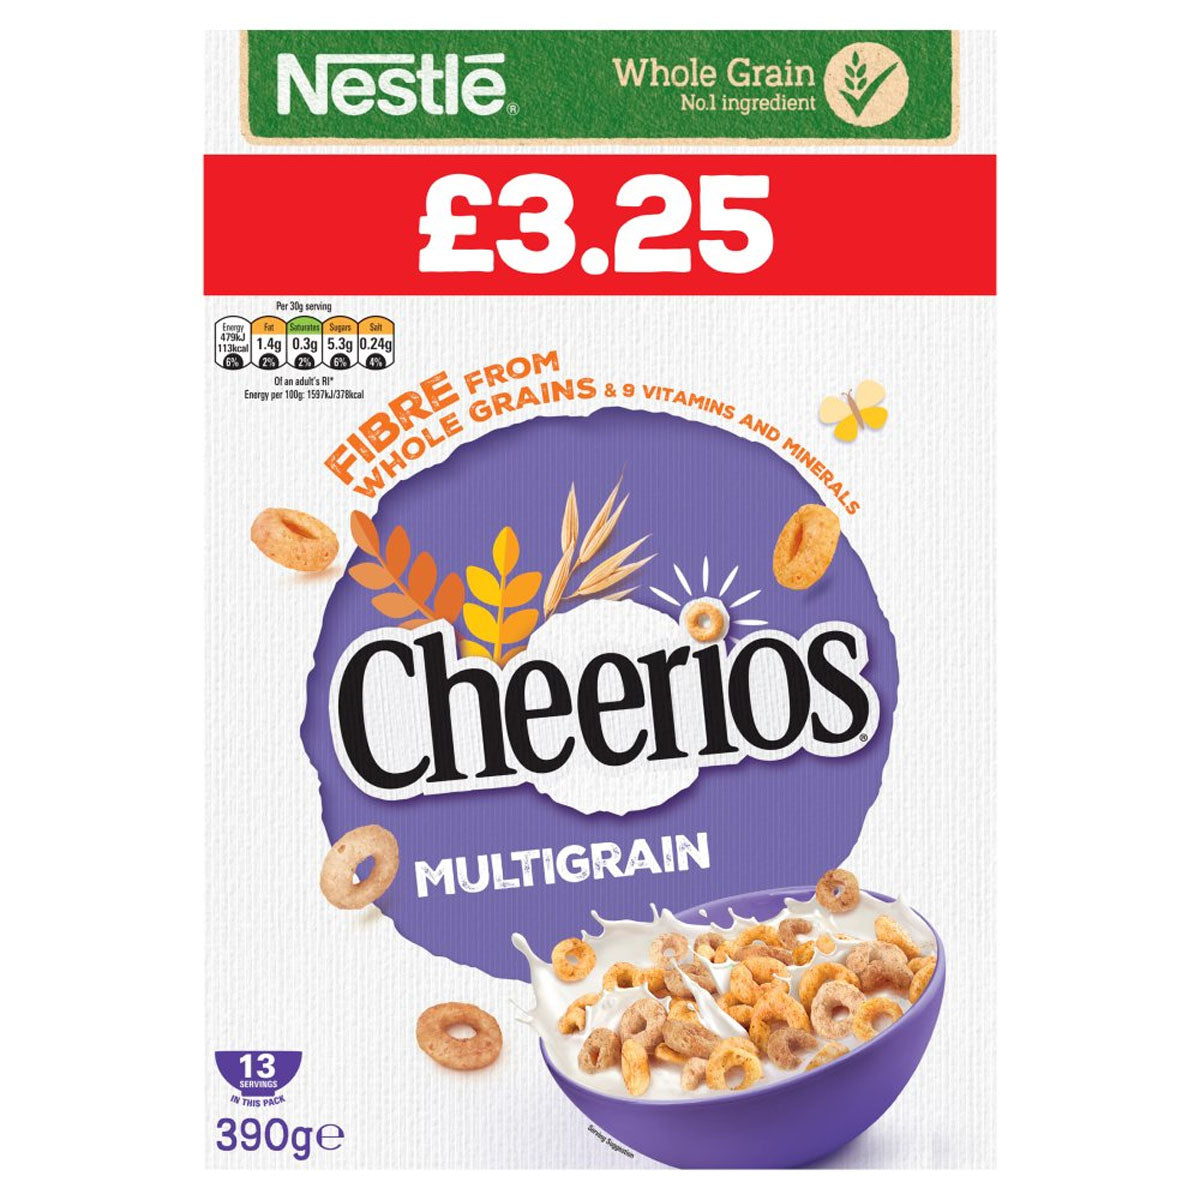 Nestle - Cheerios Multigrain Cereal - 390g box.